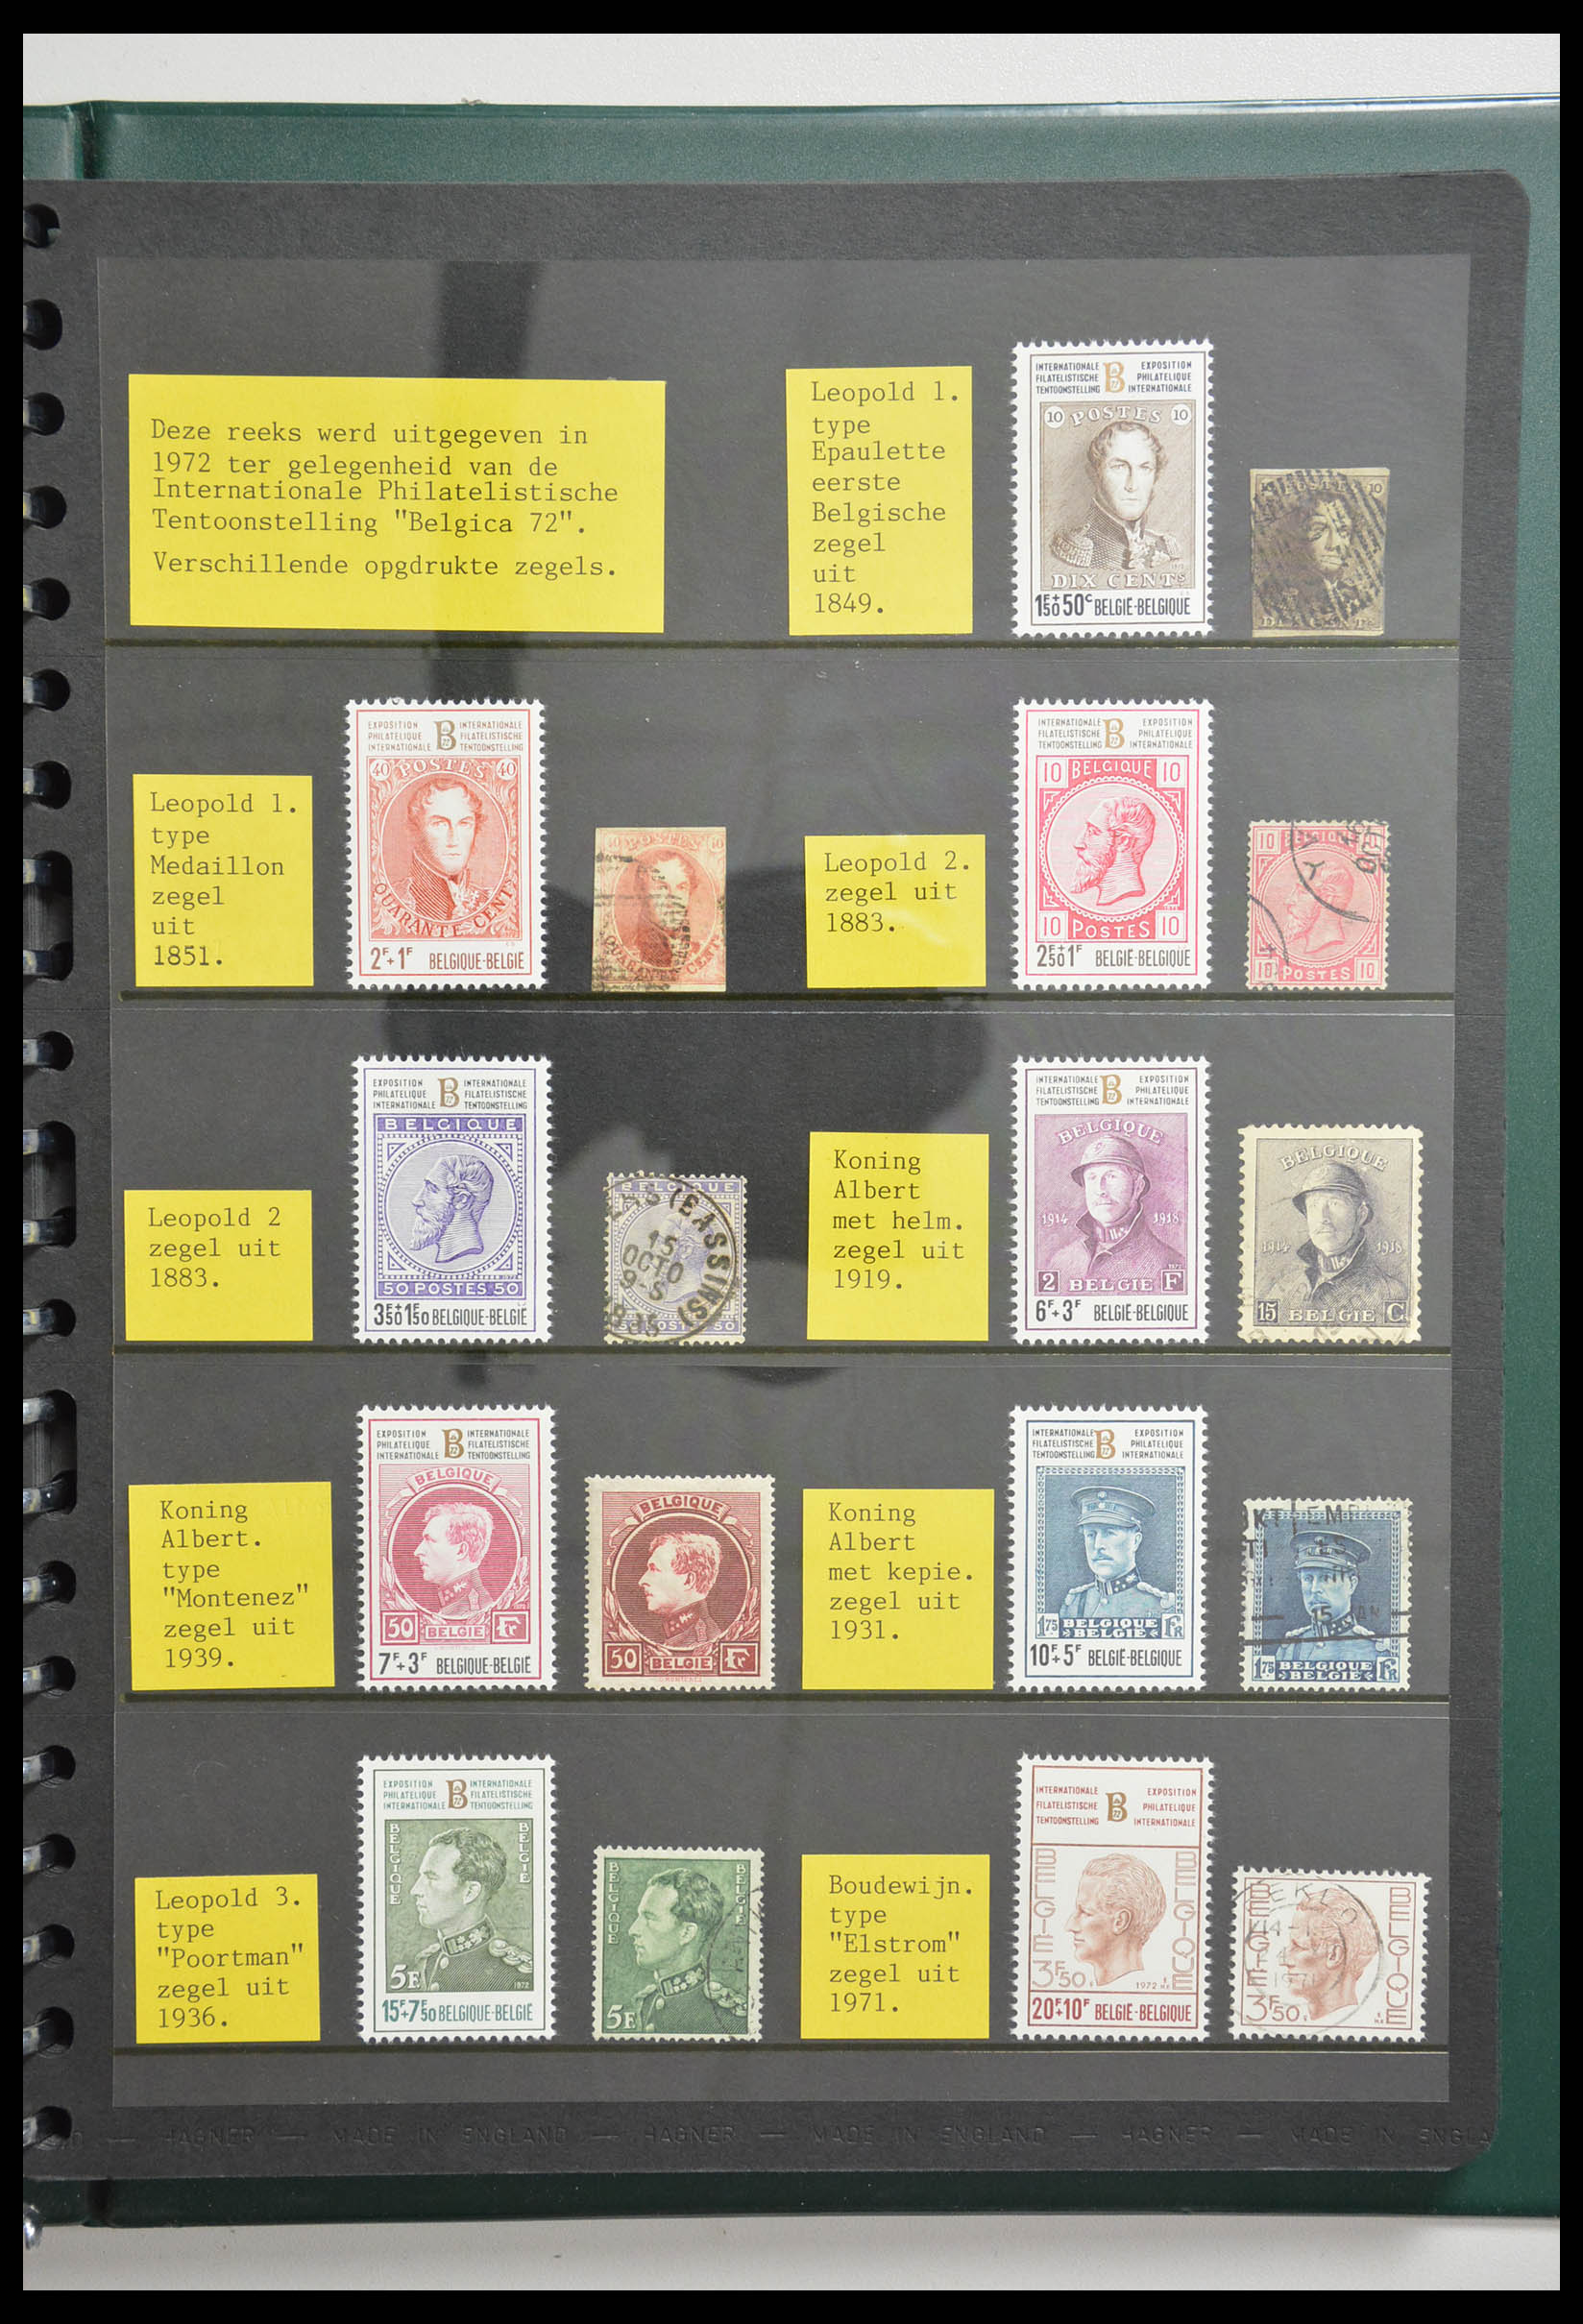 28337 111 - 28337 Postzegel op postzegel 1840-2001.